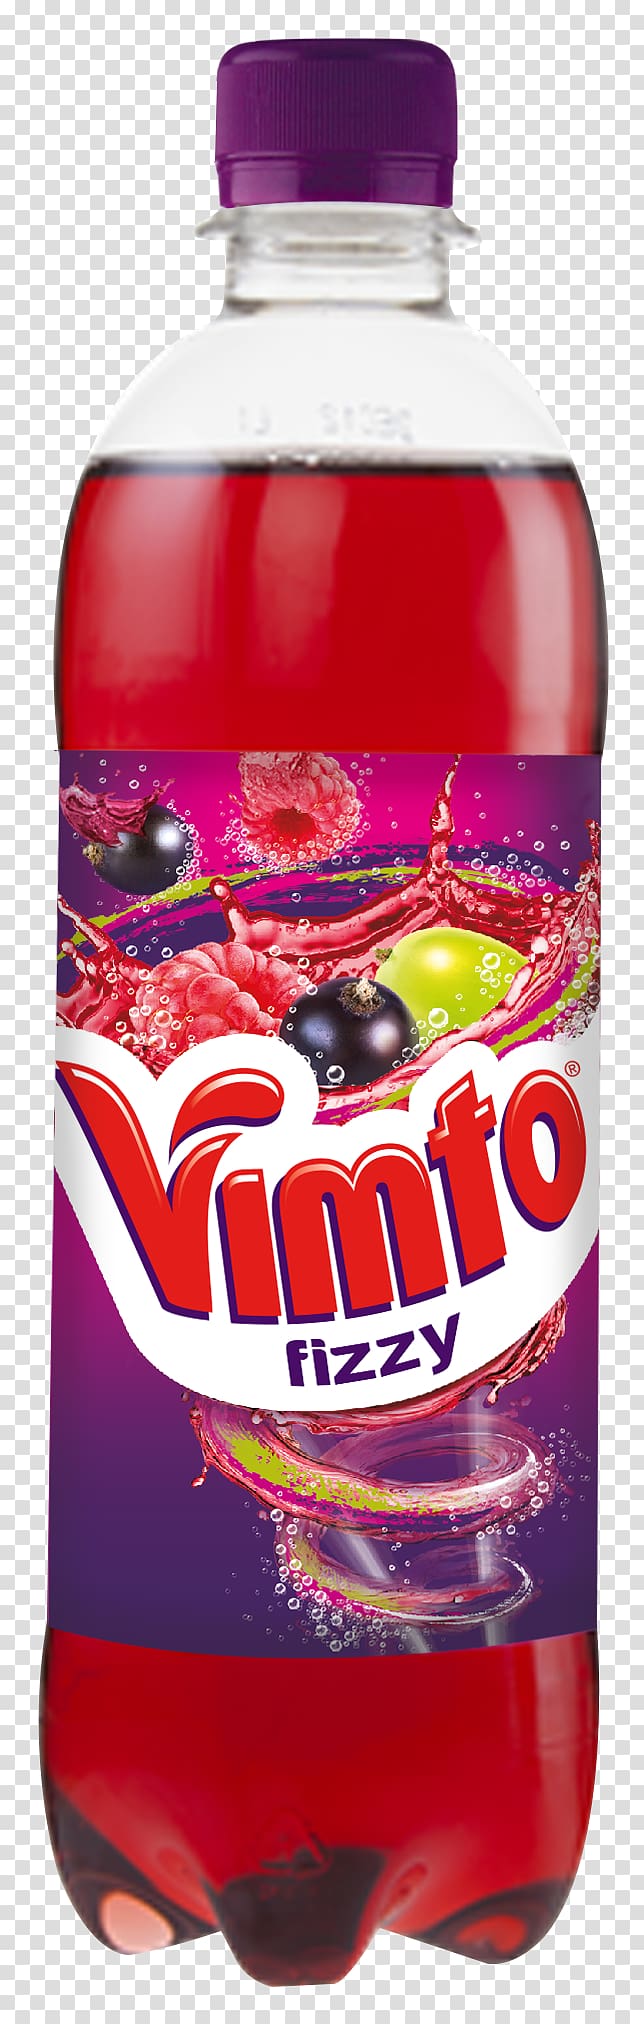 Fizzy Drinks Vimto Enhanced water Diet Coke Bottle, bottle transparent background PNG clipart